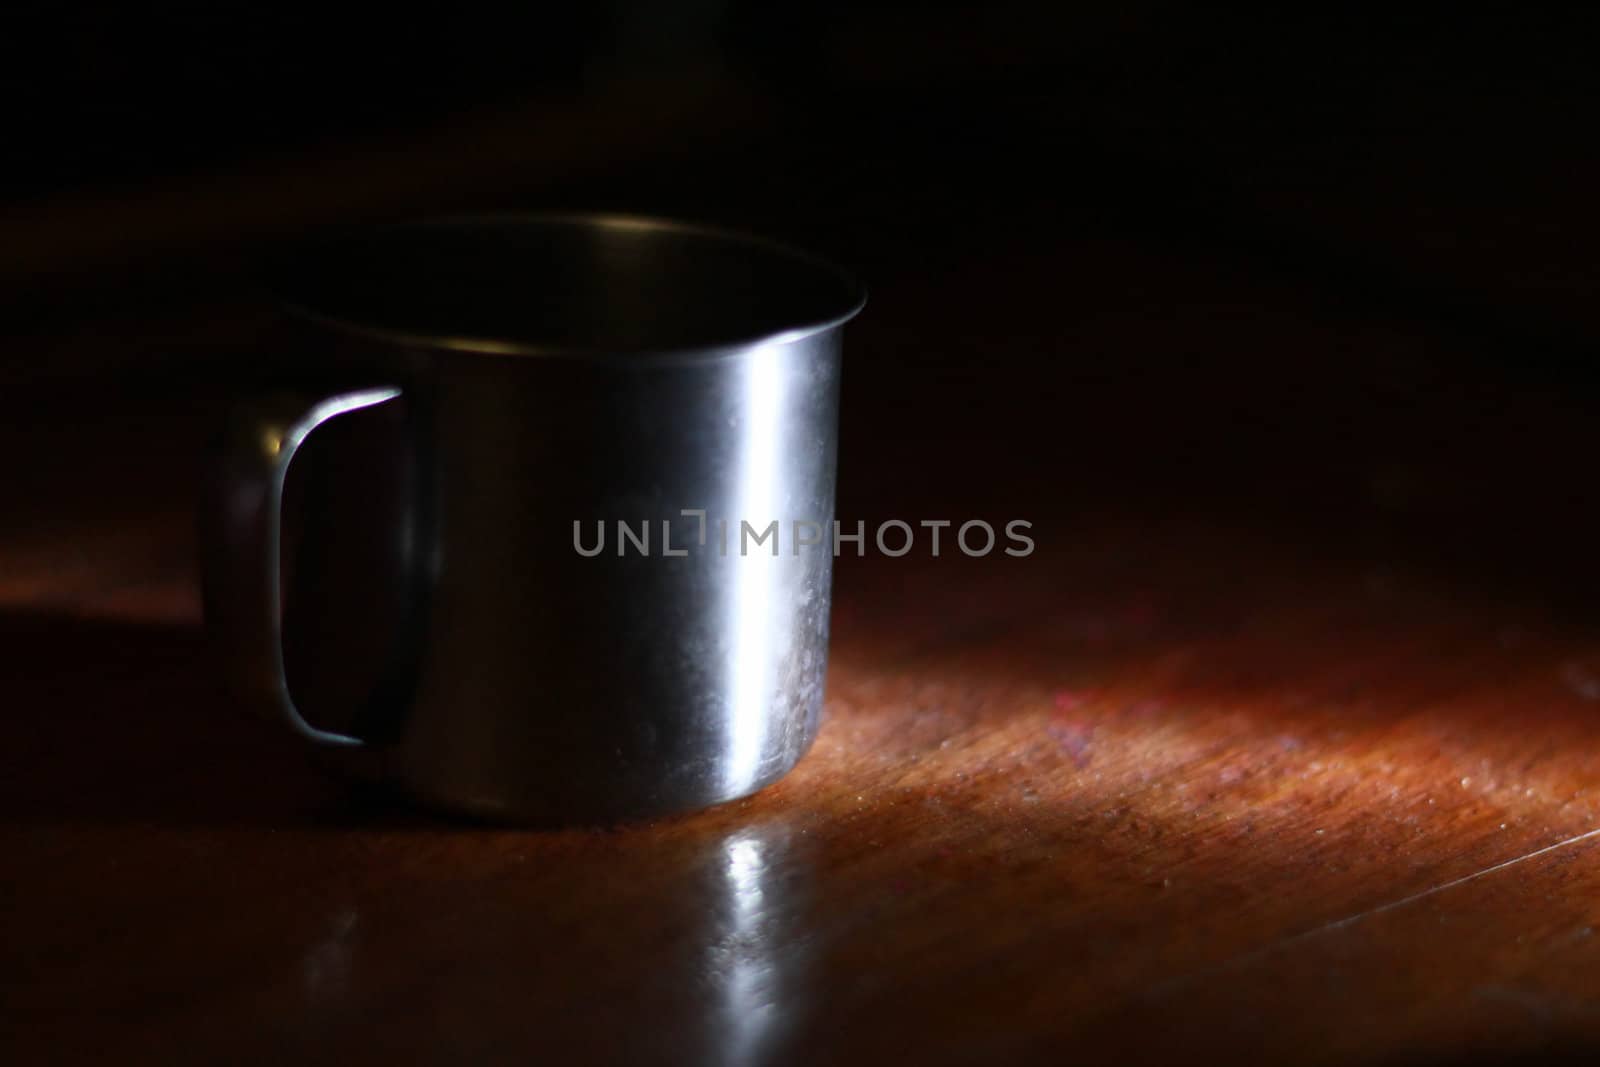  Stanless steel mug in the light by kaidevil